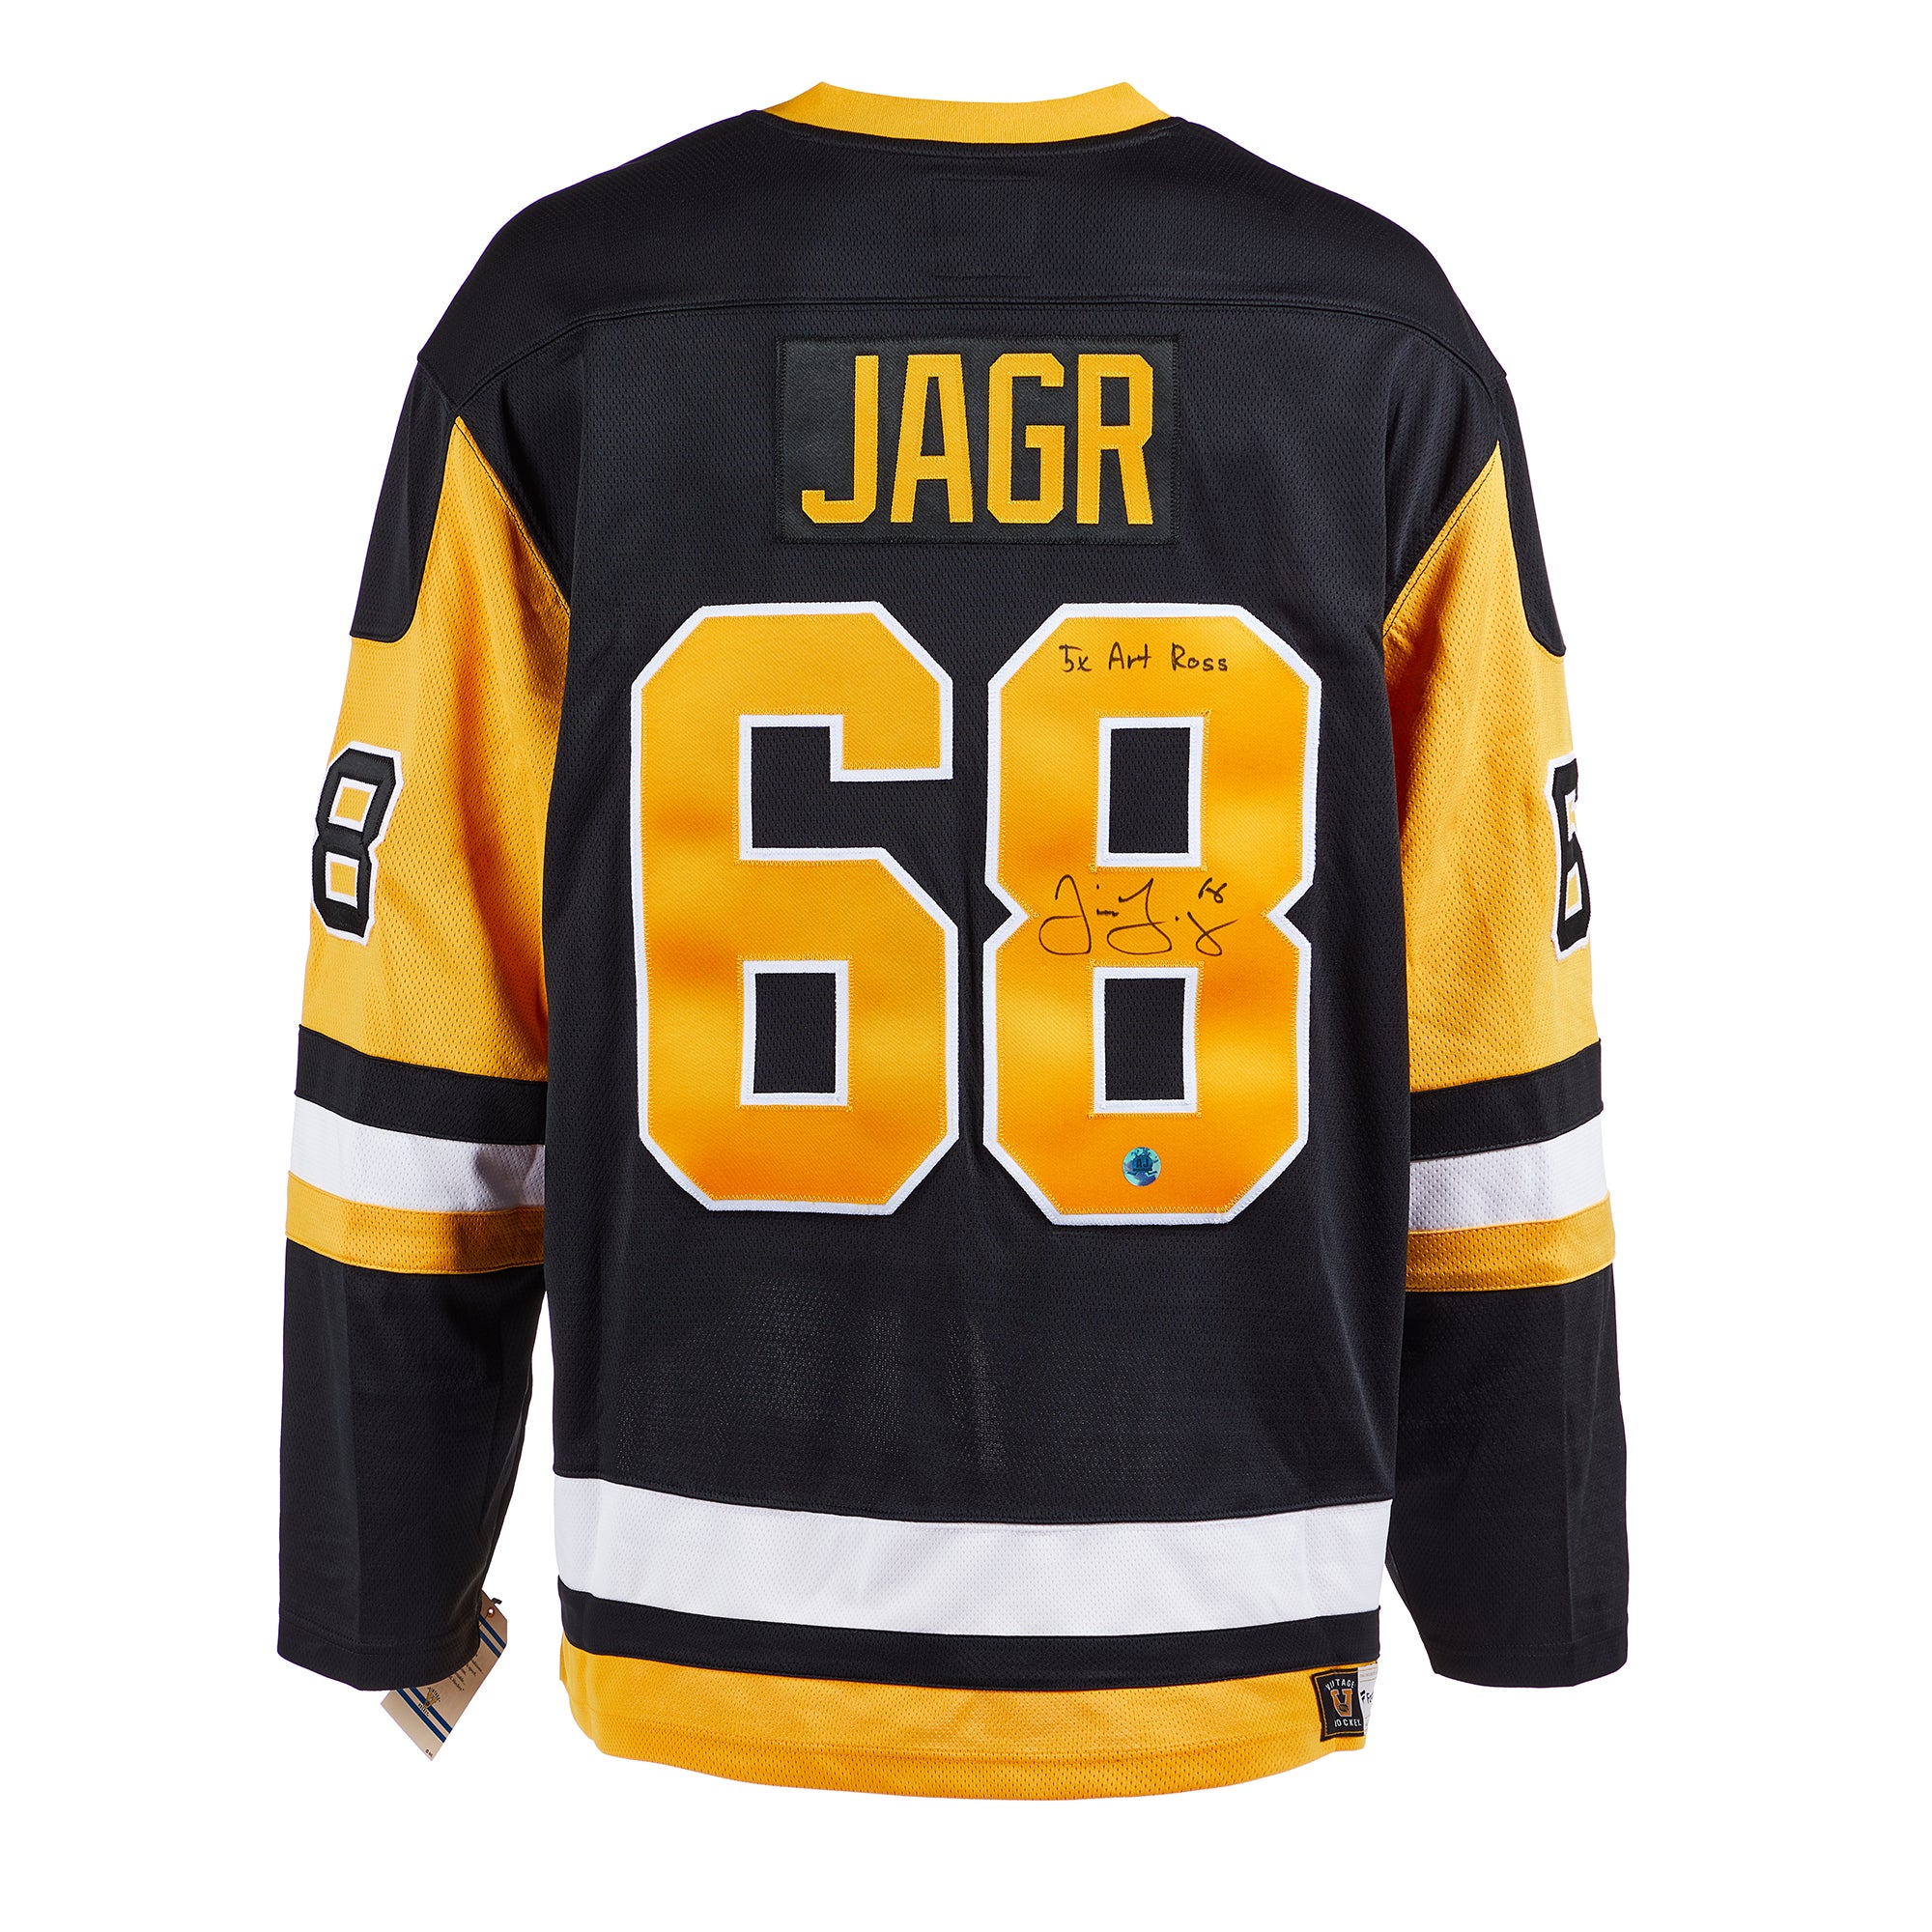 Jaromir Jagr signed autographed CCM game authentic Penguins jersey NHL